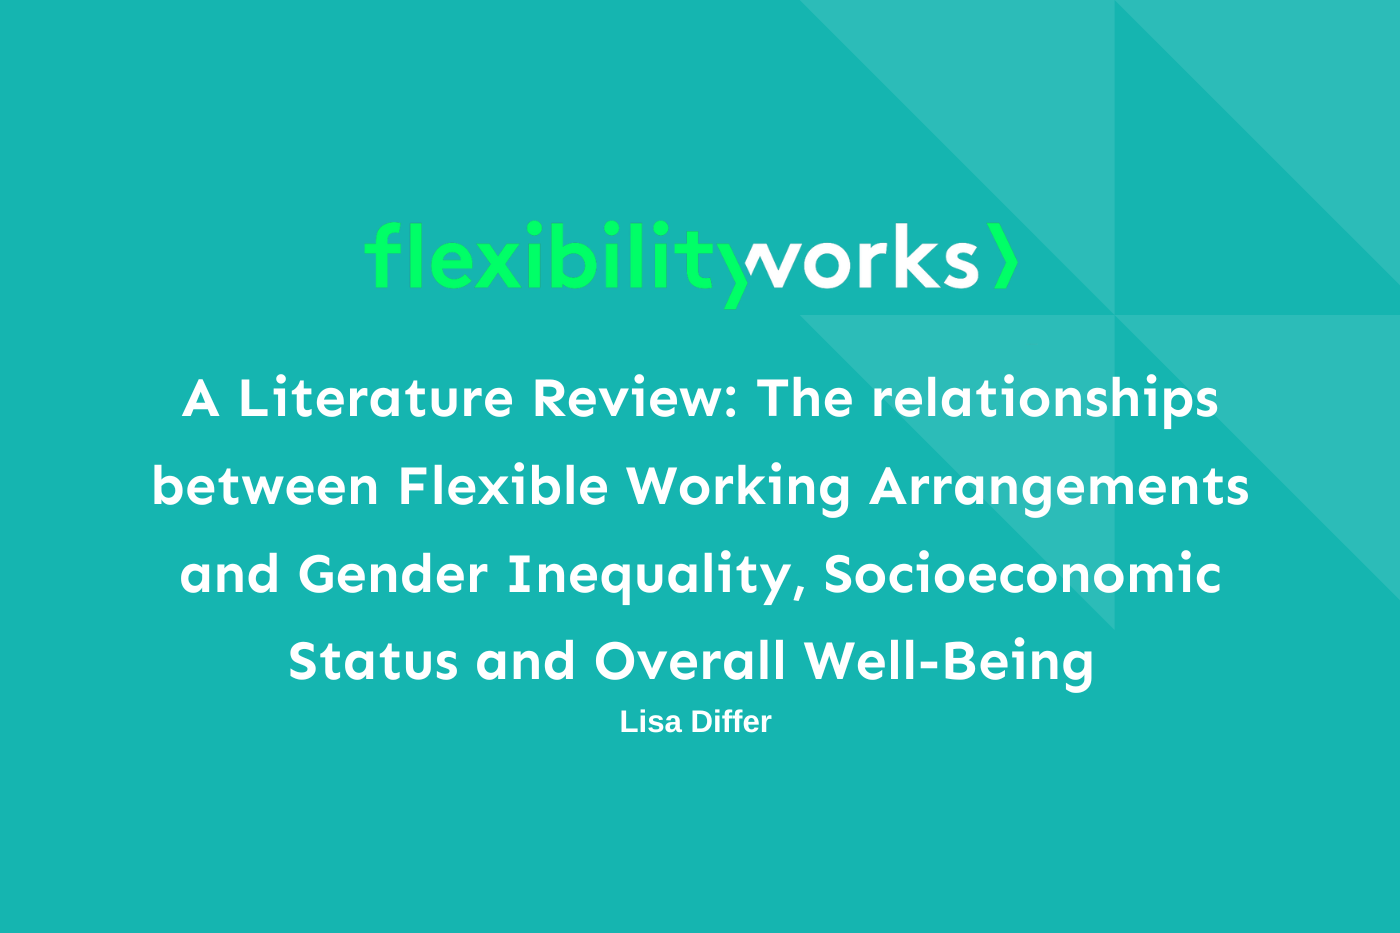 Flexible Working, gender, socioeconomic inequality and wellbeing